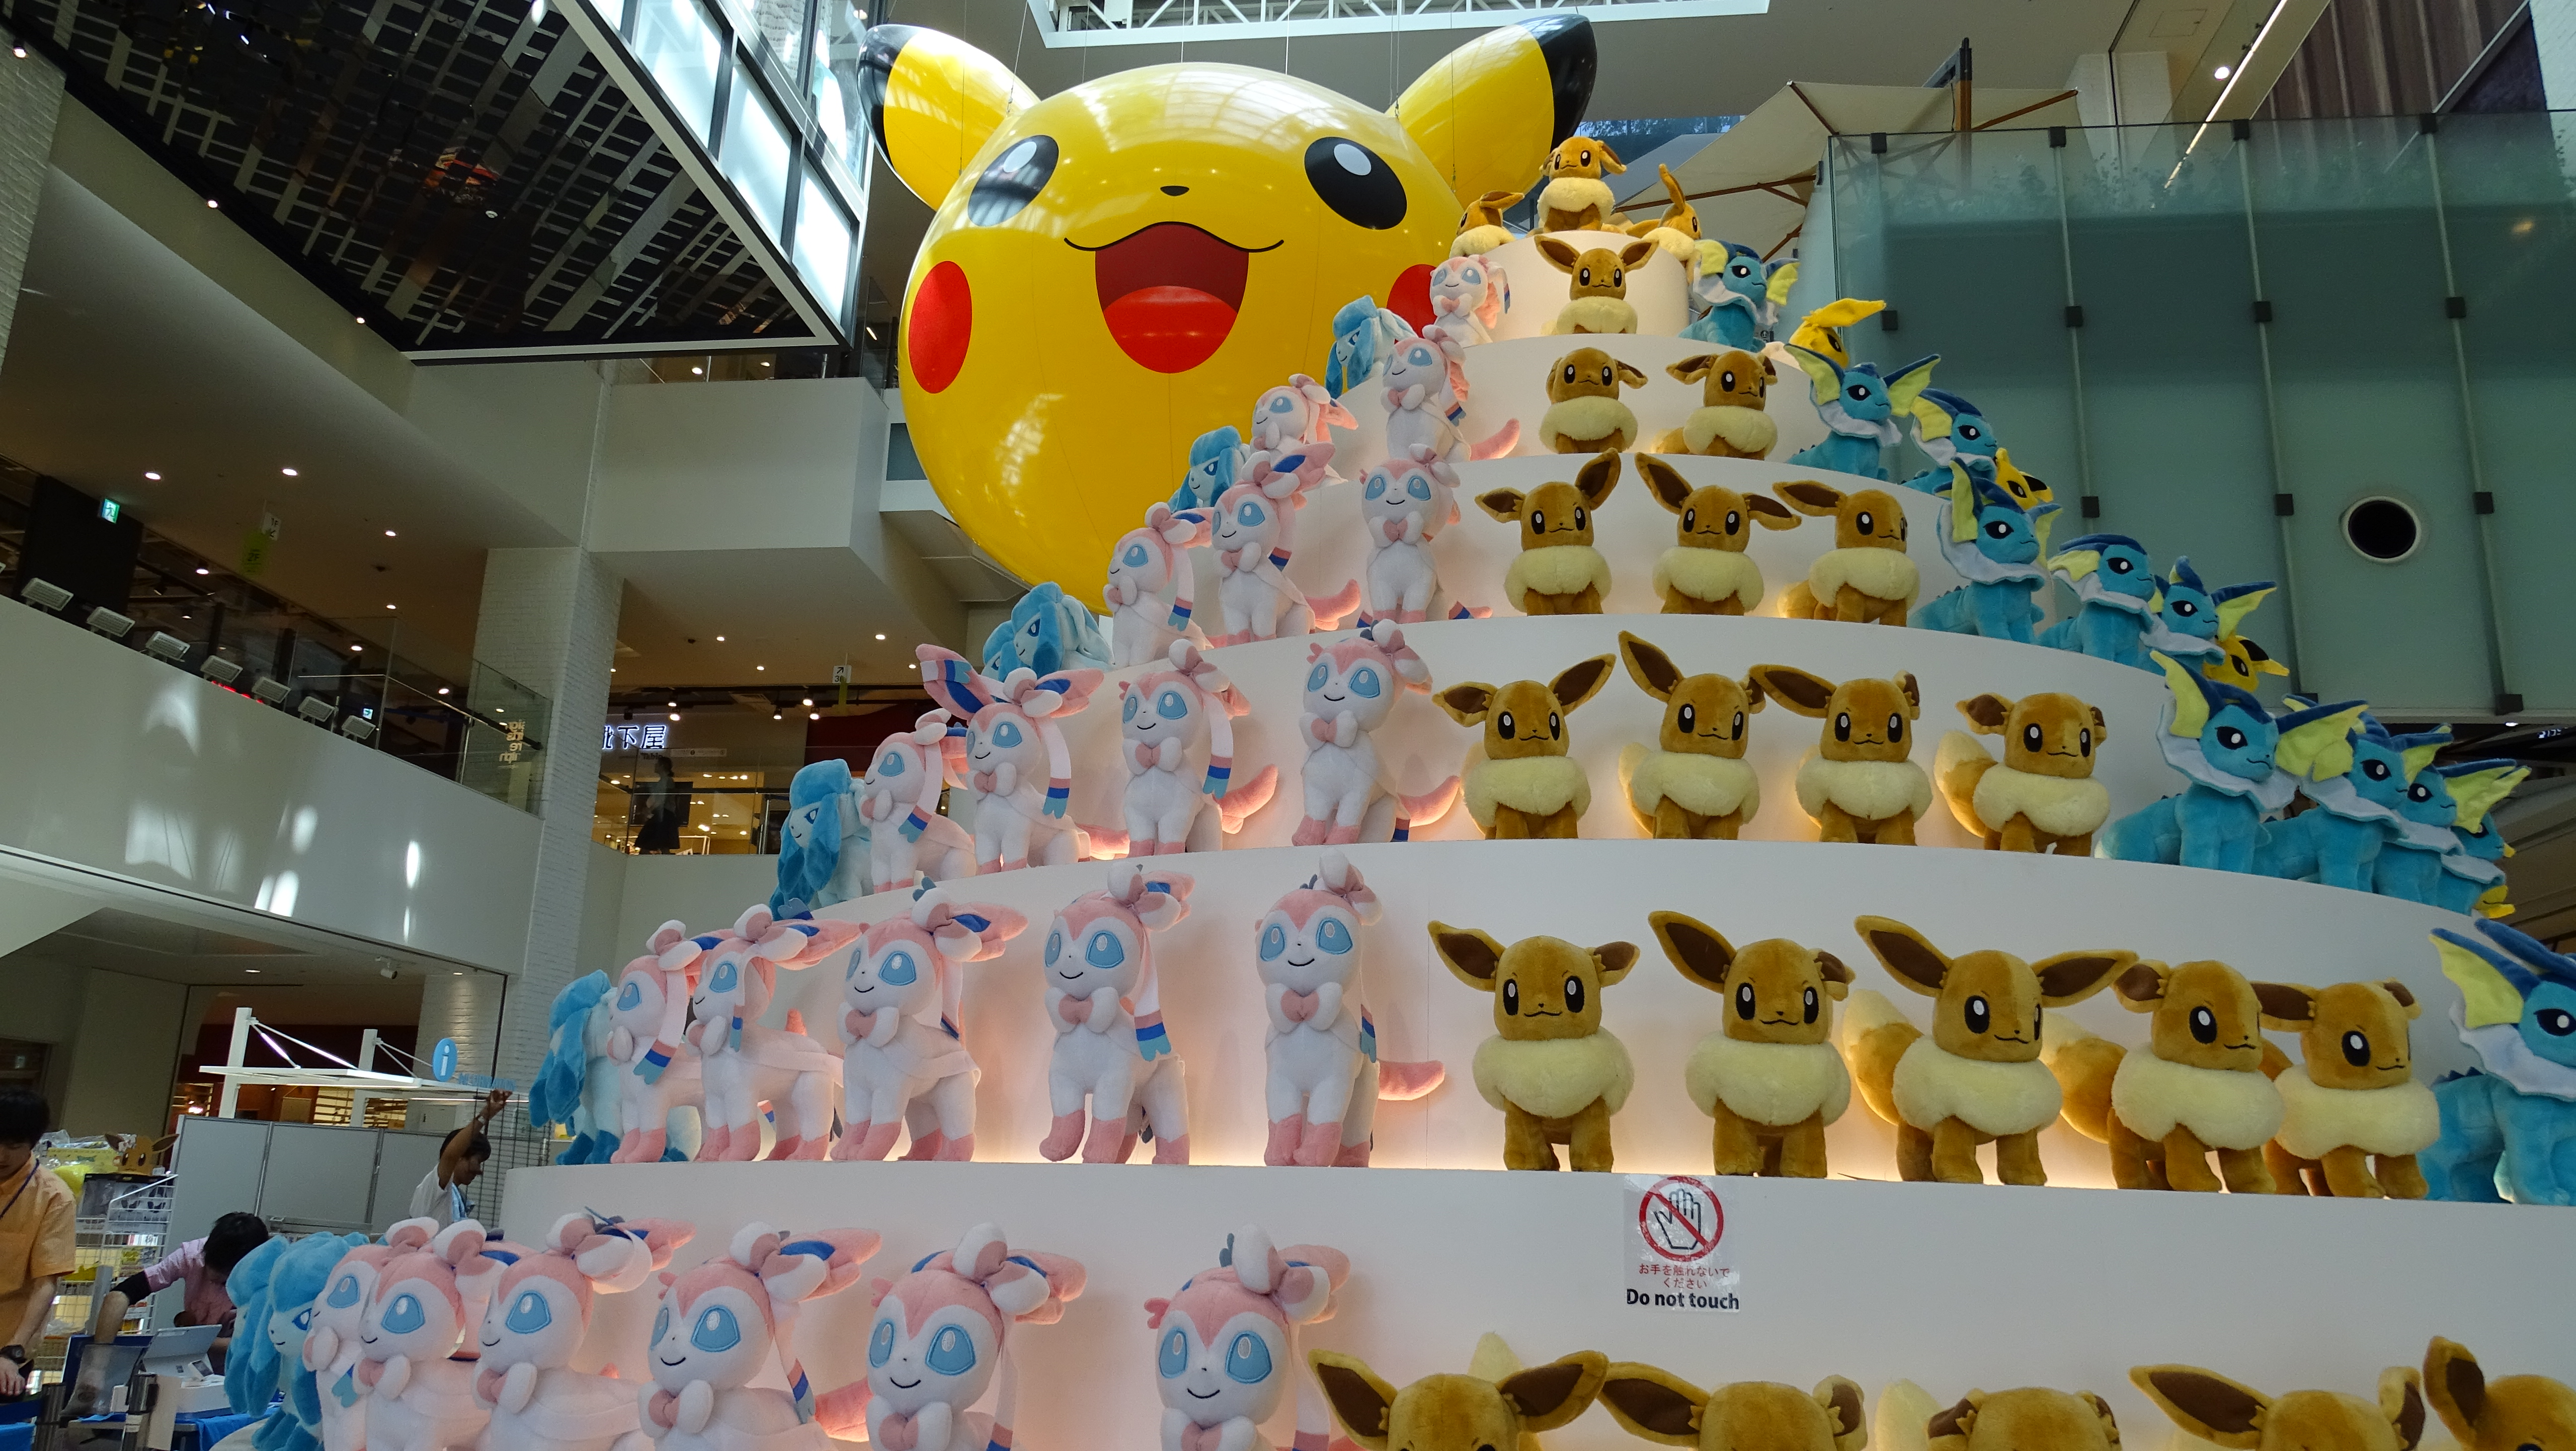 [PHOTOS] Pikachu Outbreak 2018: Hundreds of Eevee Join Pokemon Parade